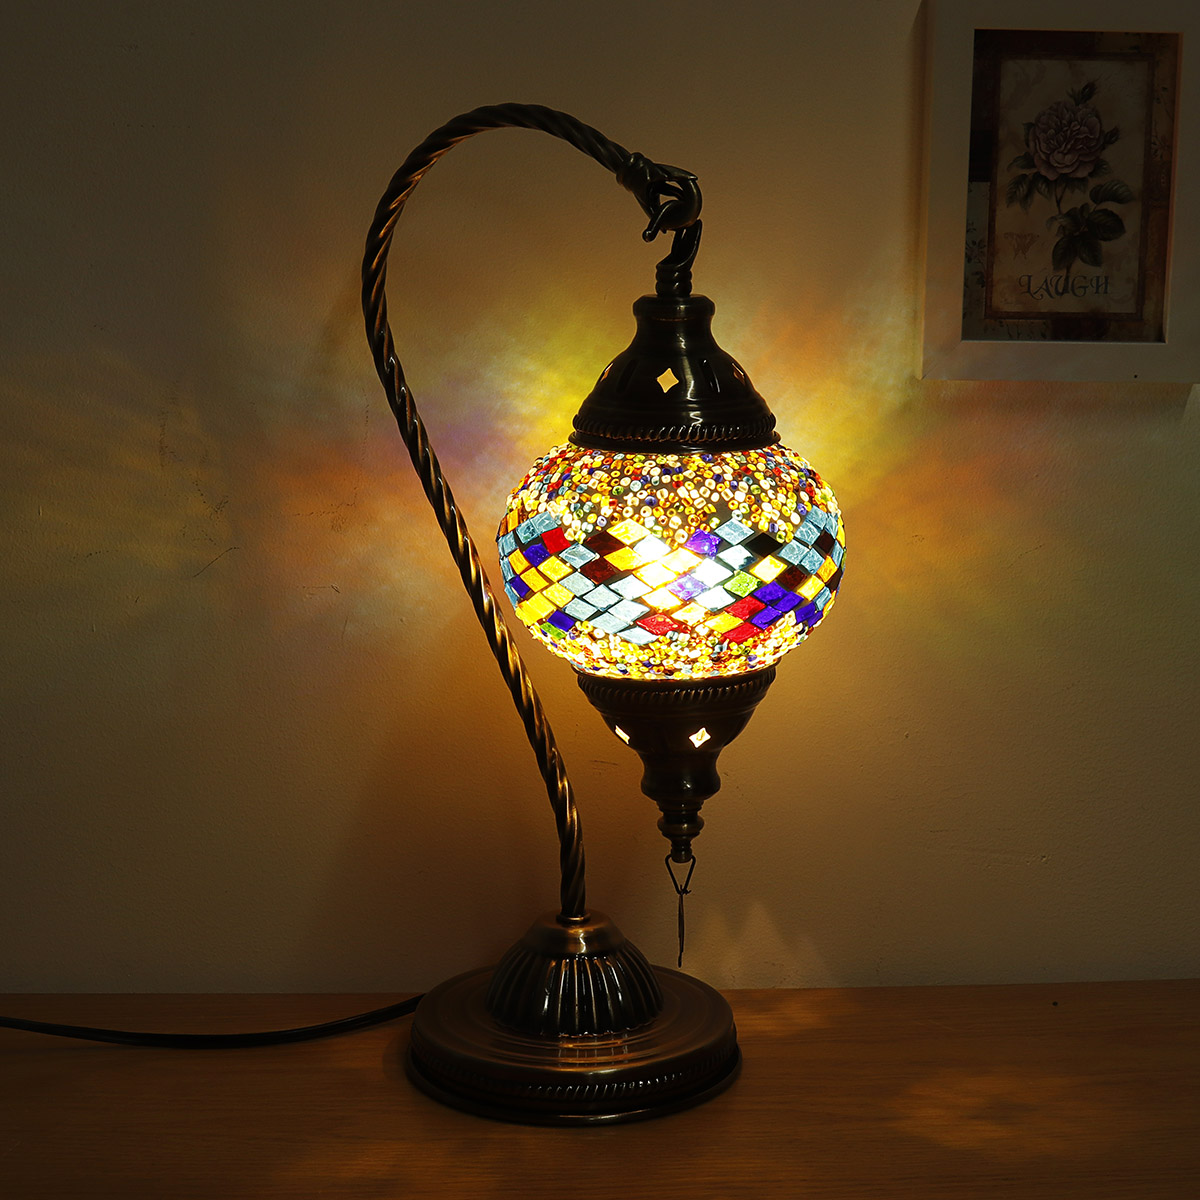 110-240V-Retro-Turkish-Moroccan-Romantic-Handmade-Table-Lamp-Home-Bar-Fixture-Decor-E27-1797087-5